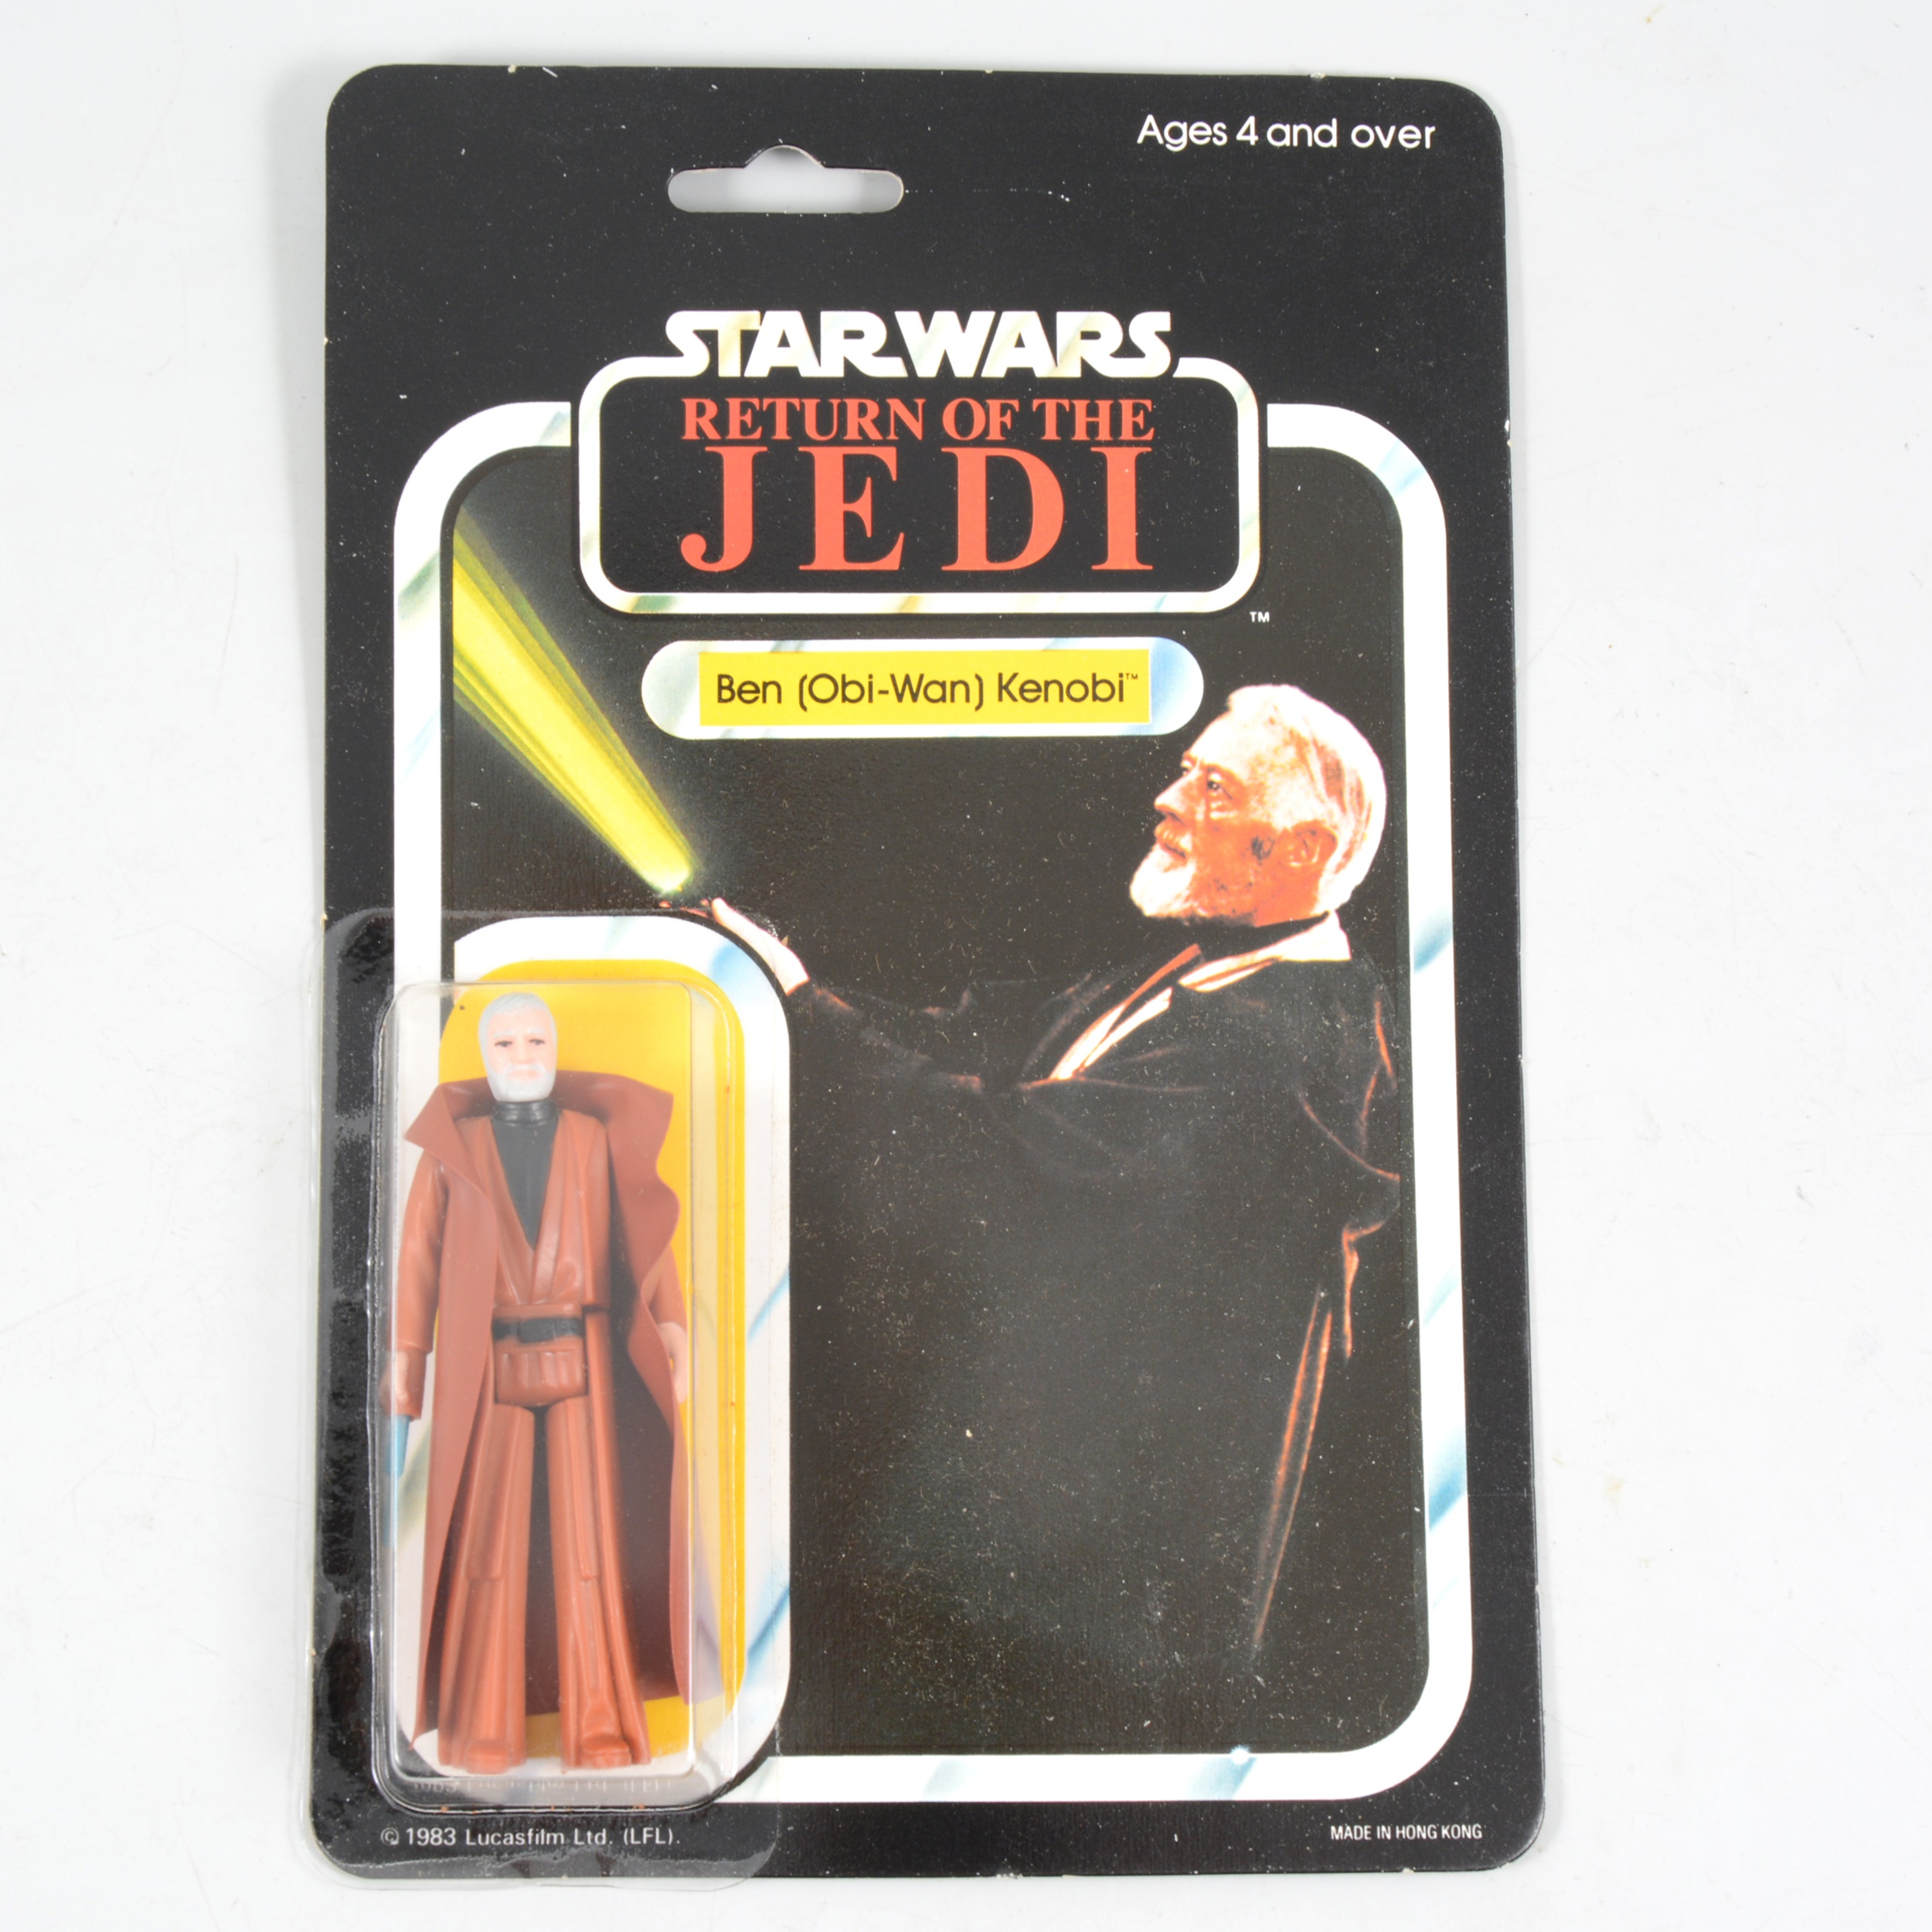 Star Wars figure Ben (Obi-Wan) Kenobi